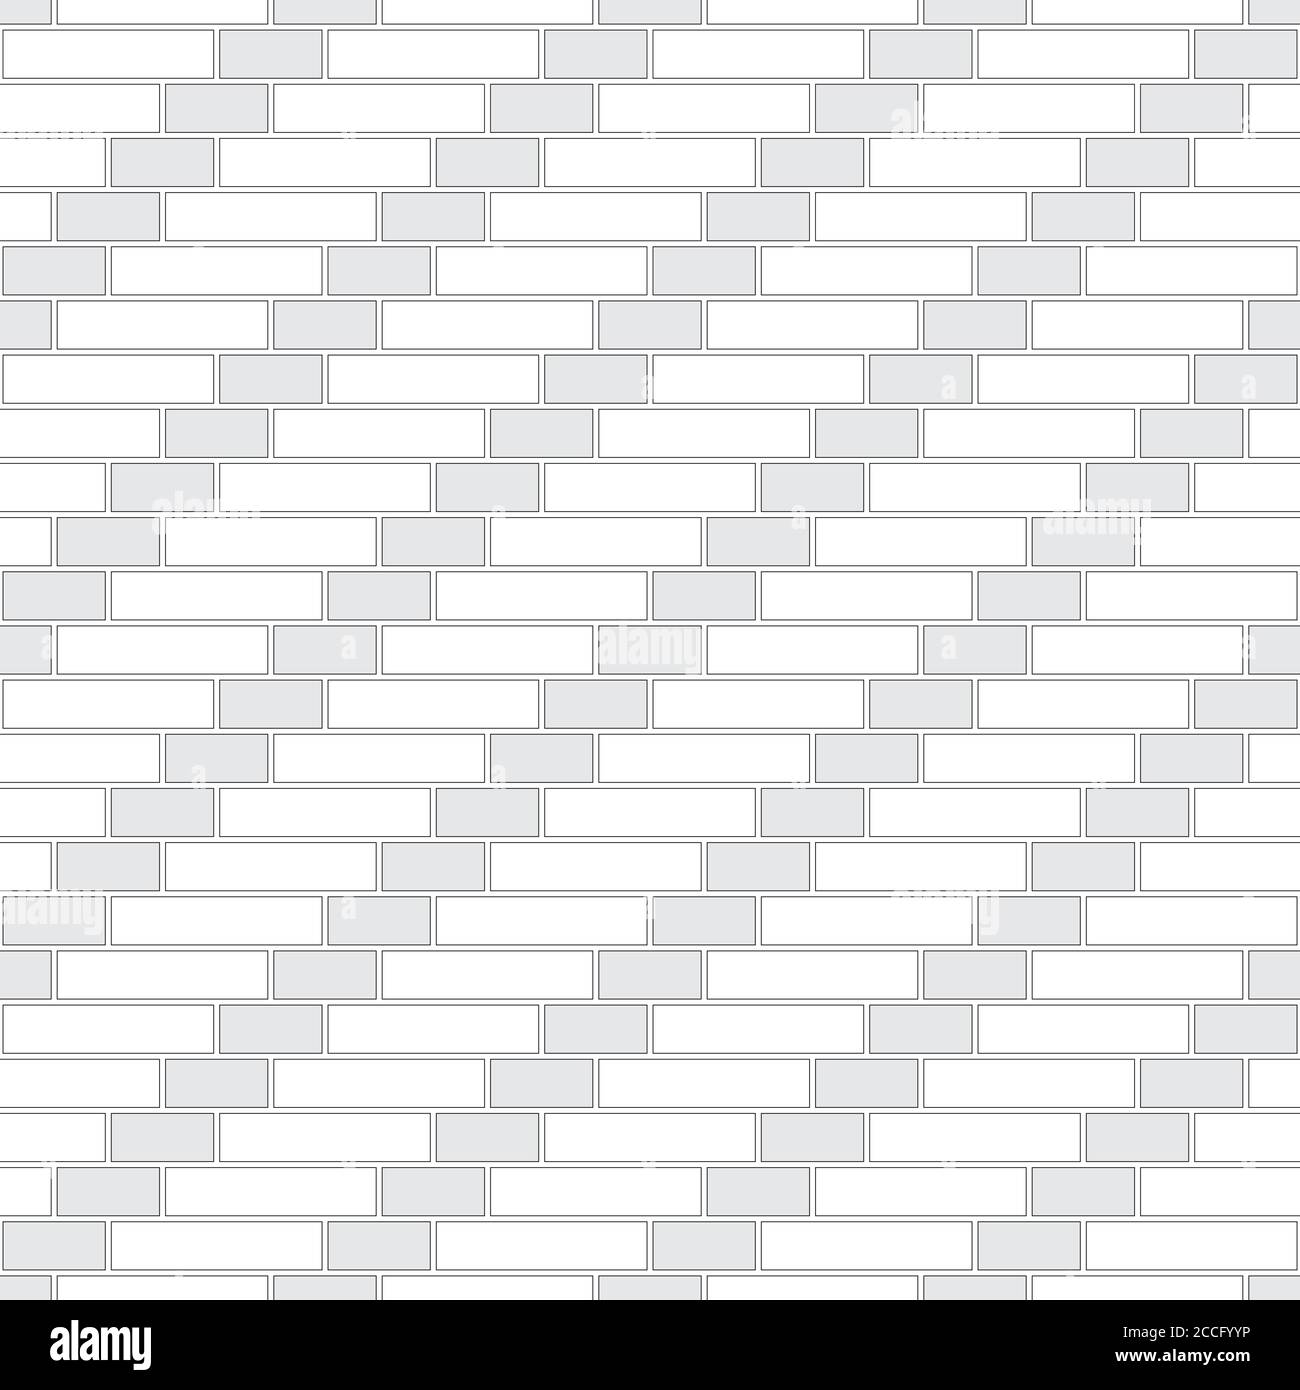 Brickwork texture seamless pattern. Decorative appearance of Gothic brick bond. Ladder masonry design. Seamless monochrome vector illustration. Stock Vector